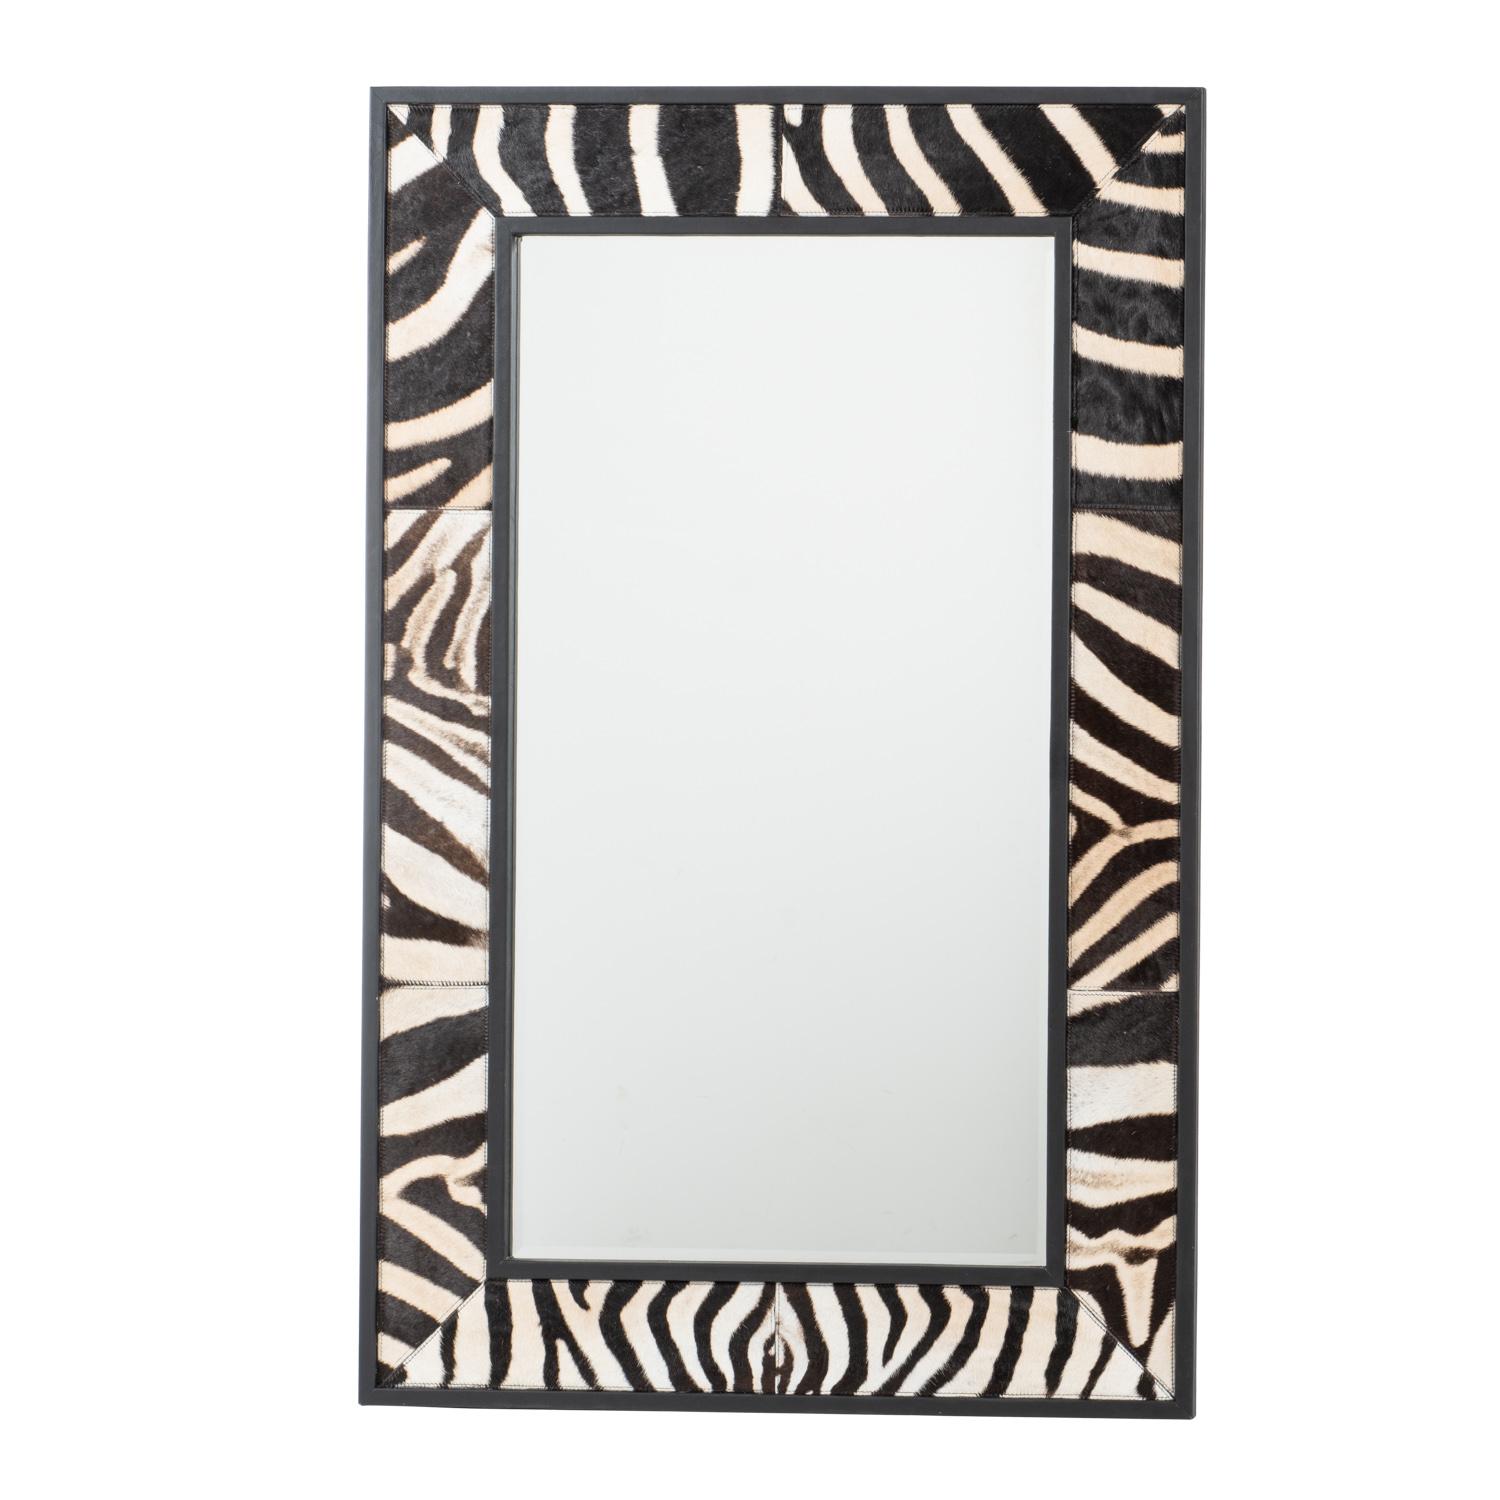 Zebra Hide Rectangle Mirror - Large